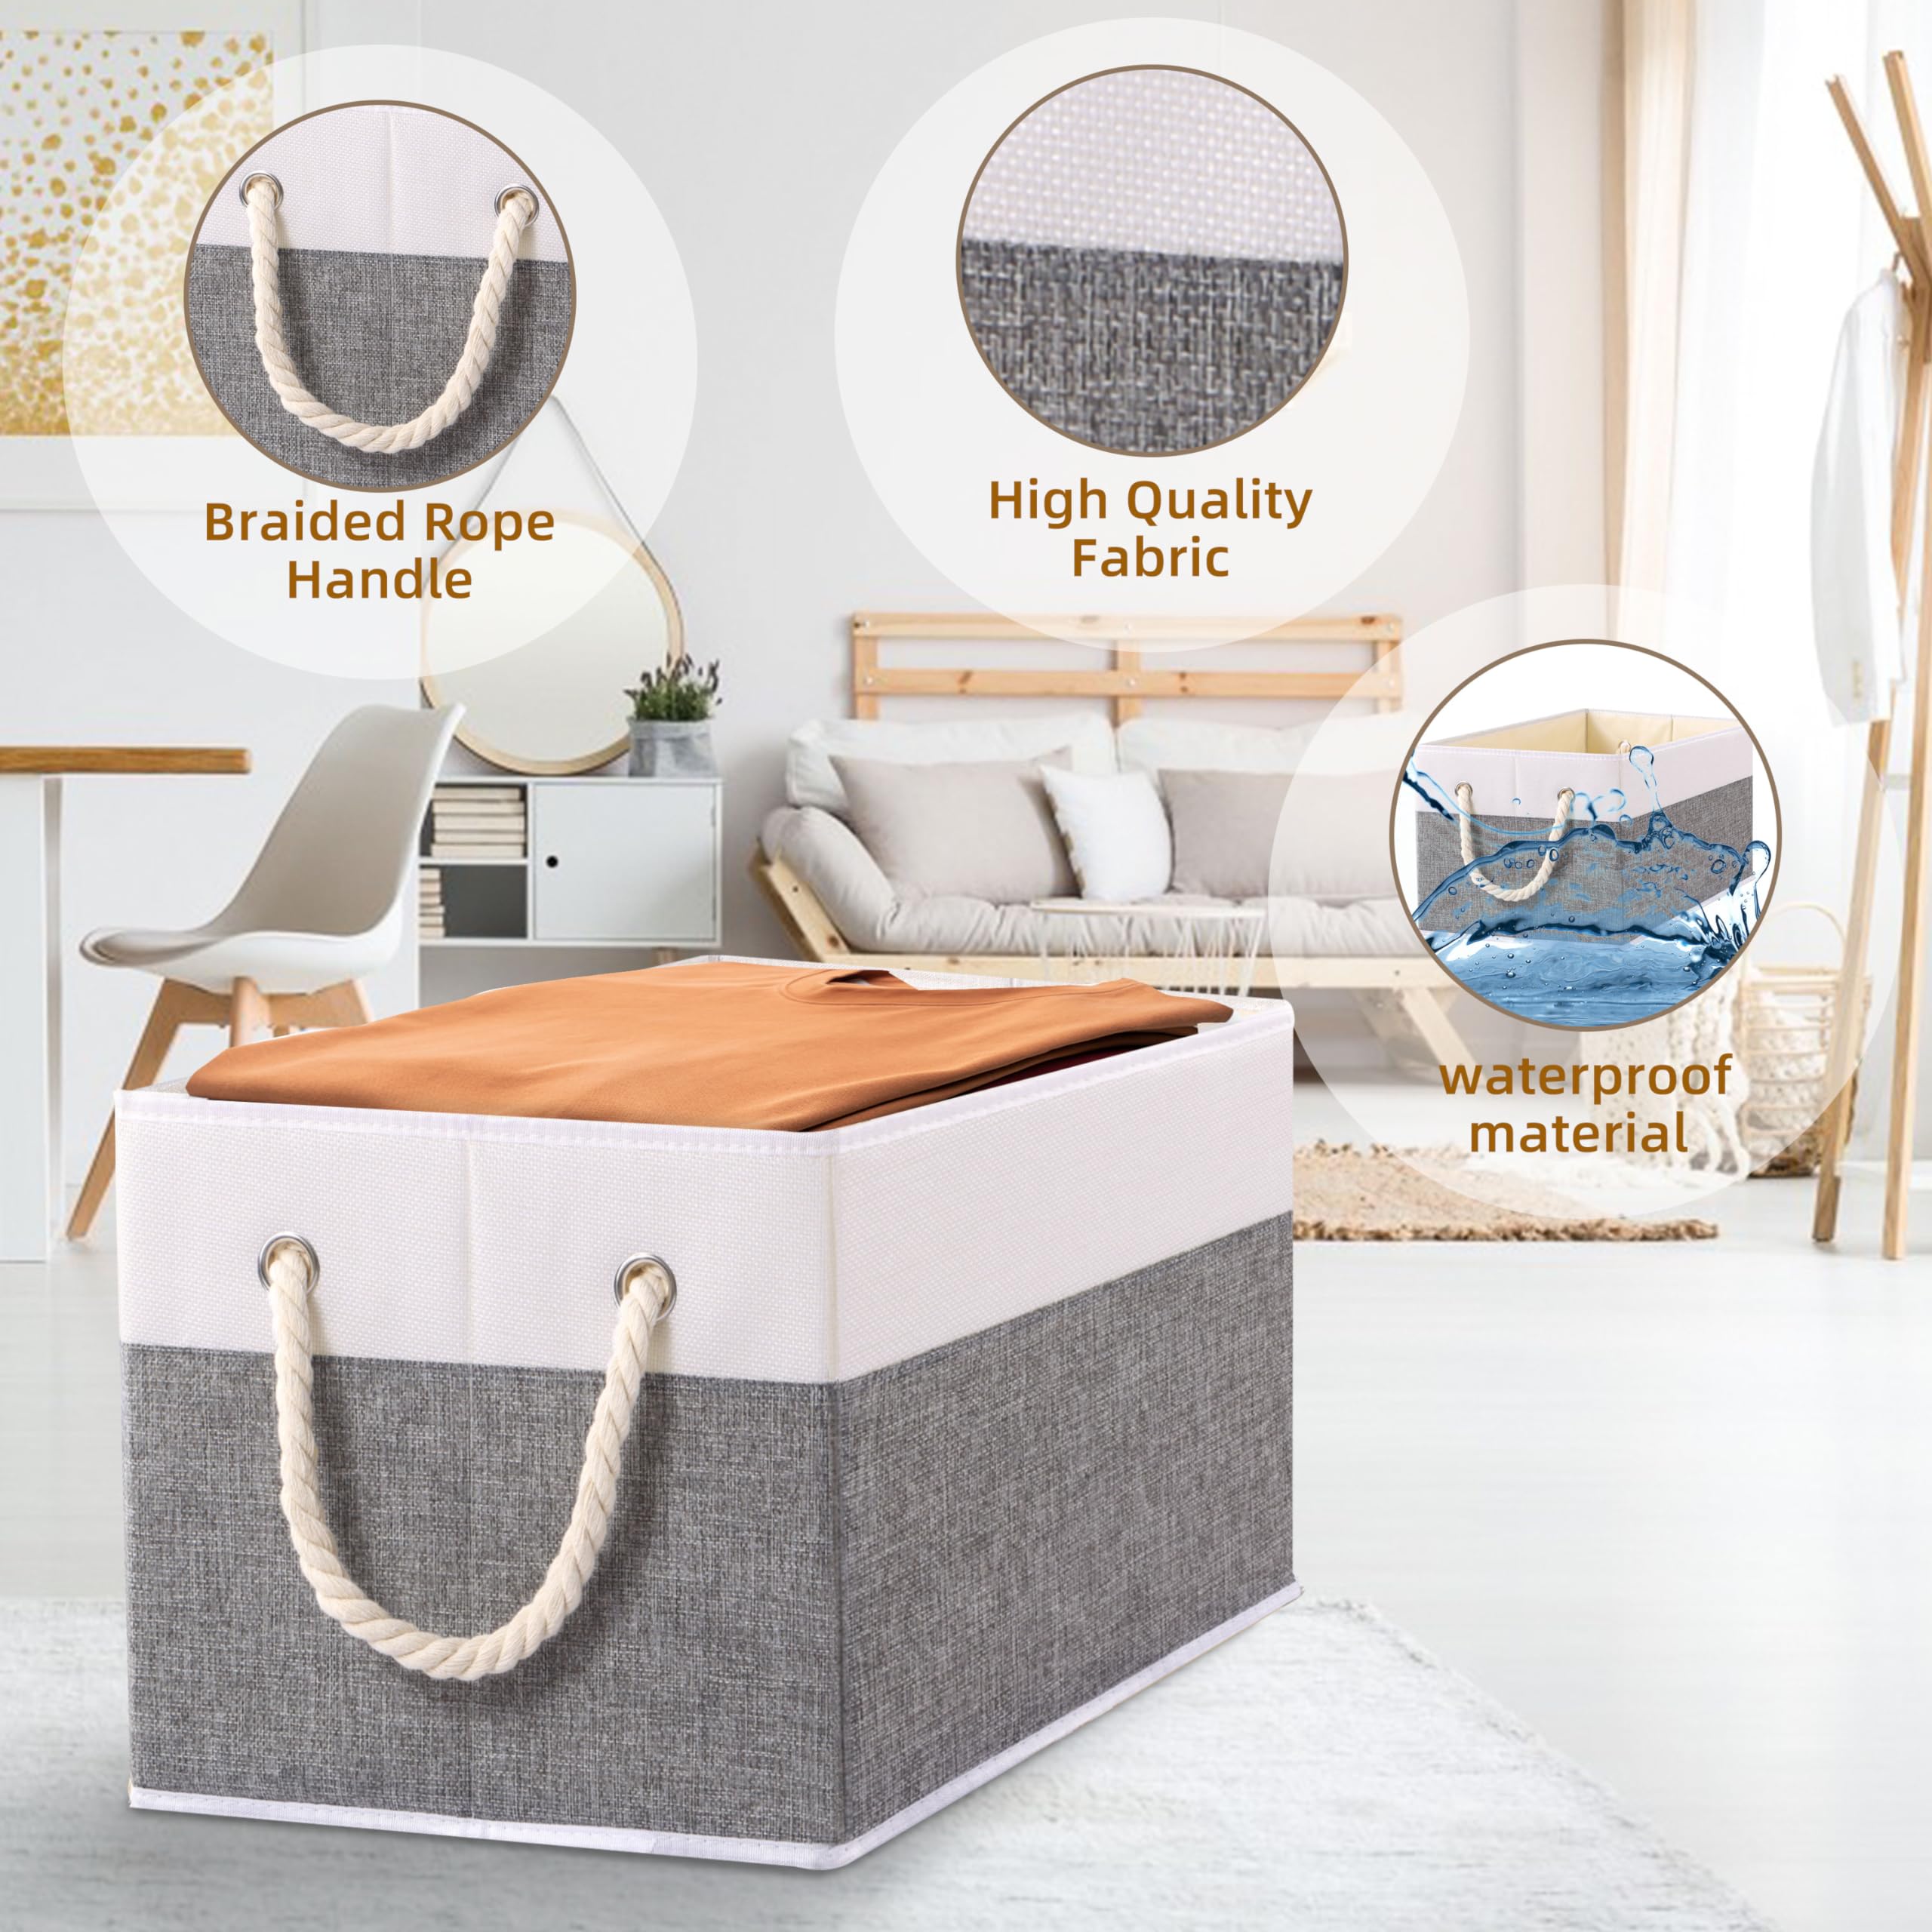 Yawinhe Foldable Storage Basket 1-Pack, Large Fabric Storage Bins with Rope Handle, Used for Organizing Shelves, Closets, Clothes Storage Box, 12.99''Lx9.05''Wx7.87''H, White/Grey